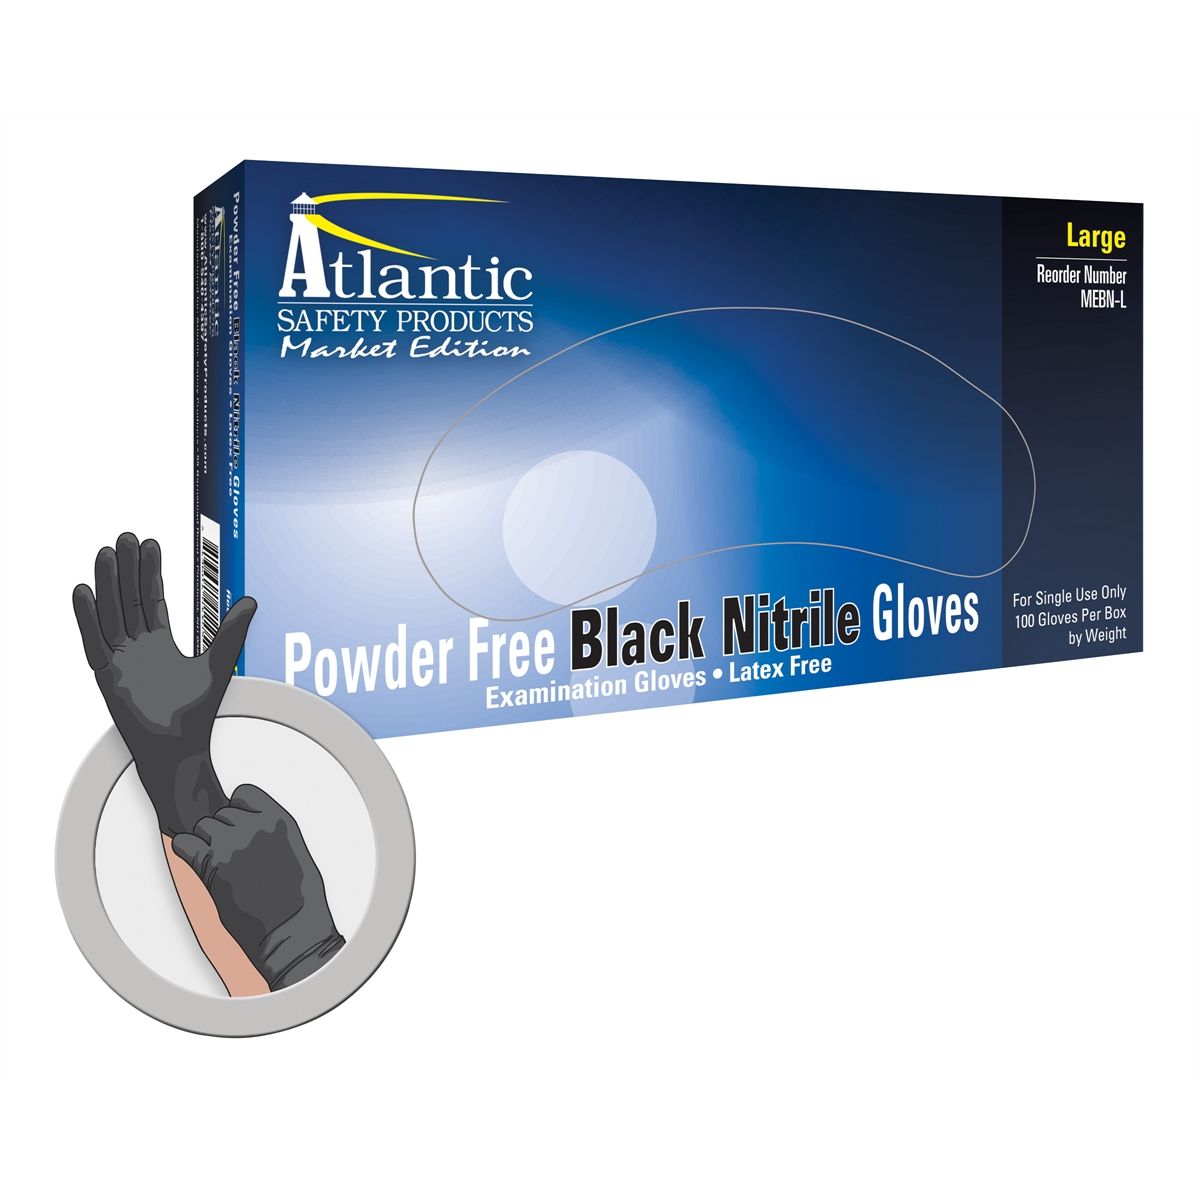 Market Edition Black Powder Free Nitrile Gloves Large